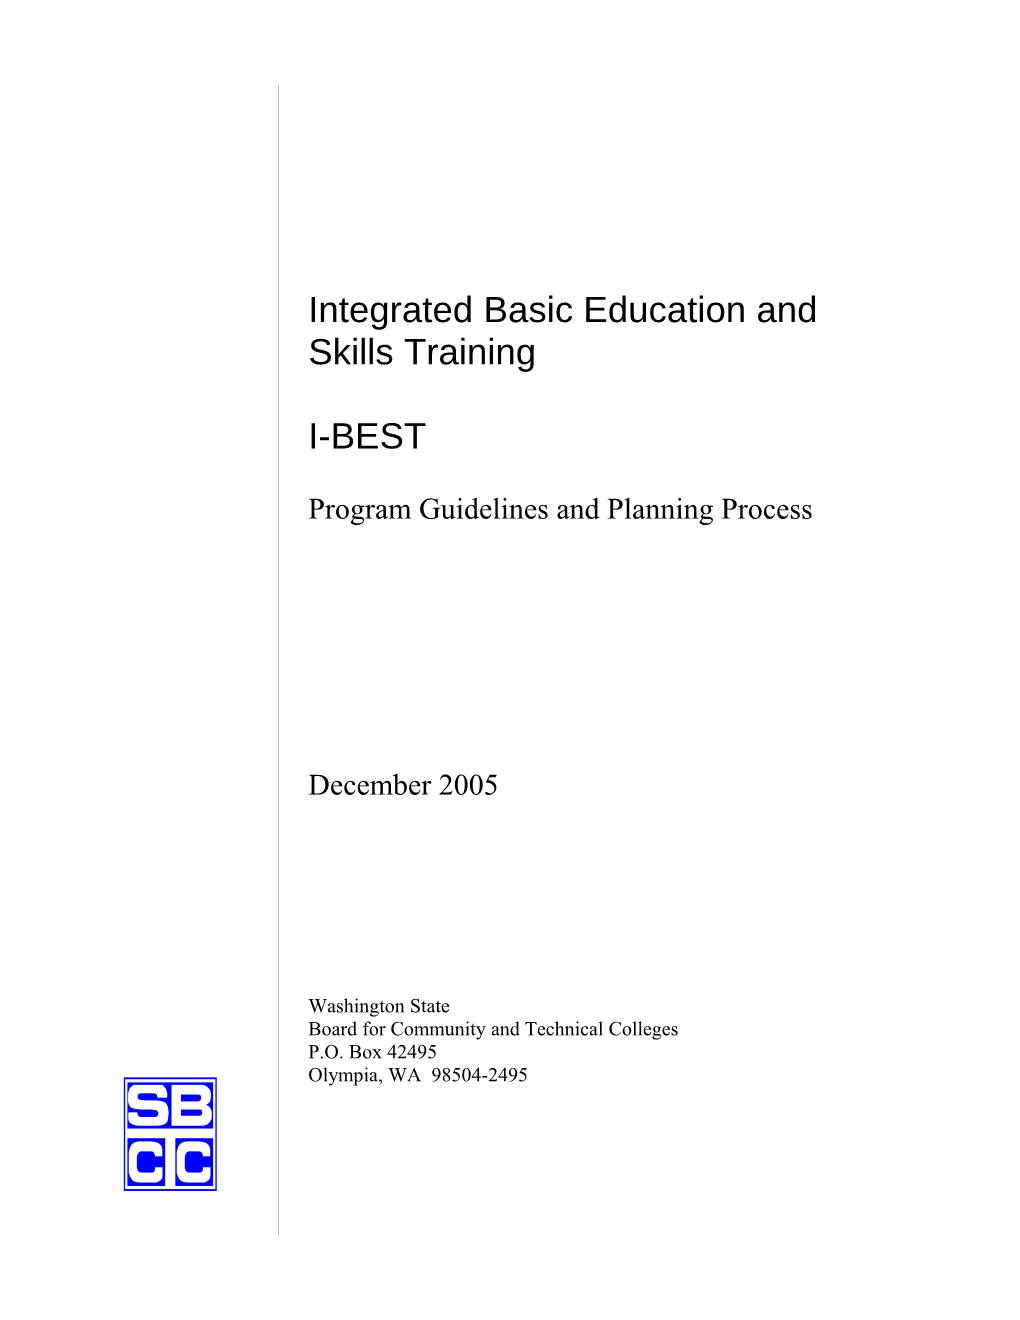 Integrated Basic Education and Skills Training